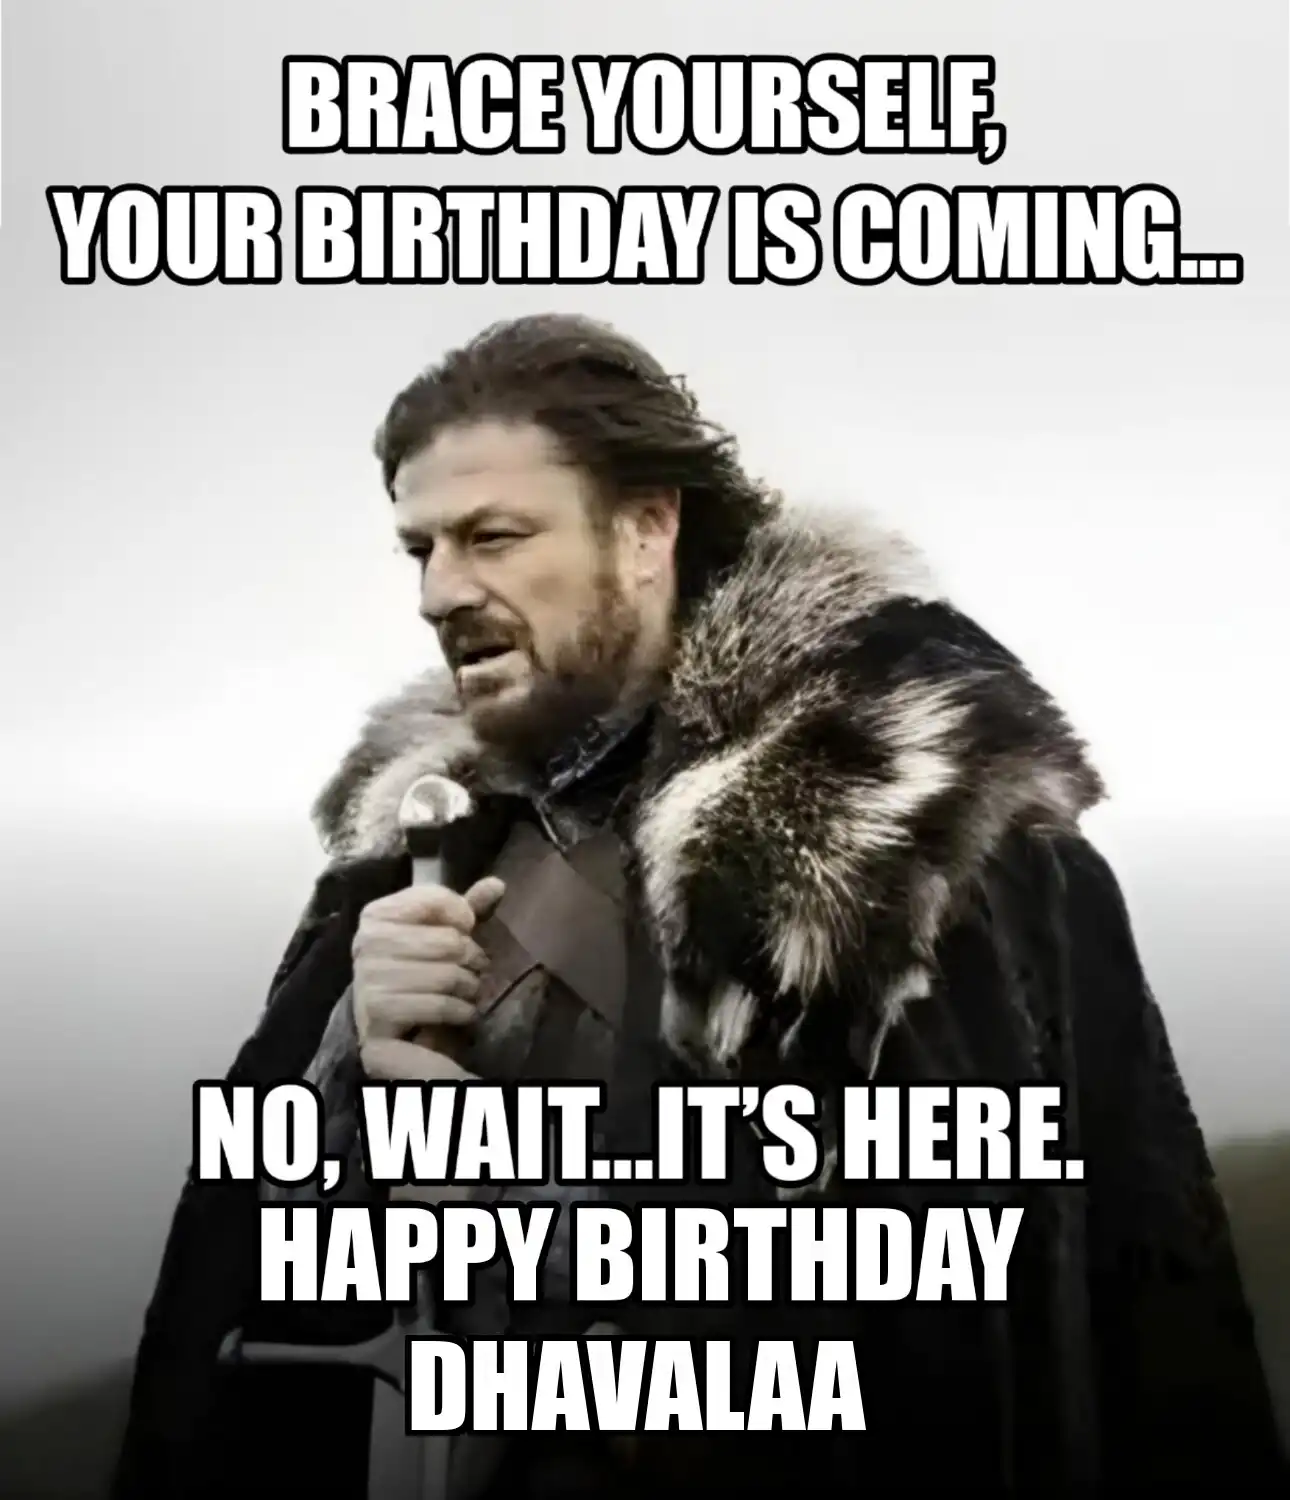 Happy Birthday Dhavalaa Brace Yourself Your Birthday Is Coming Meme